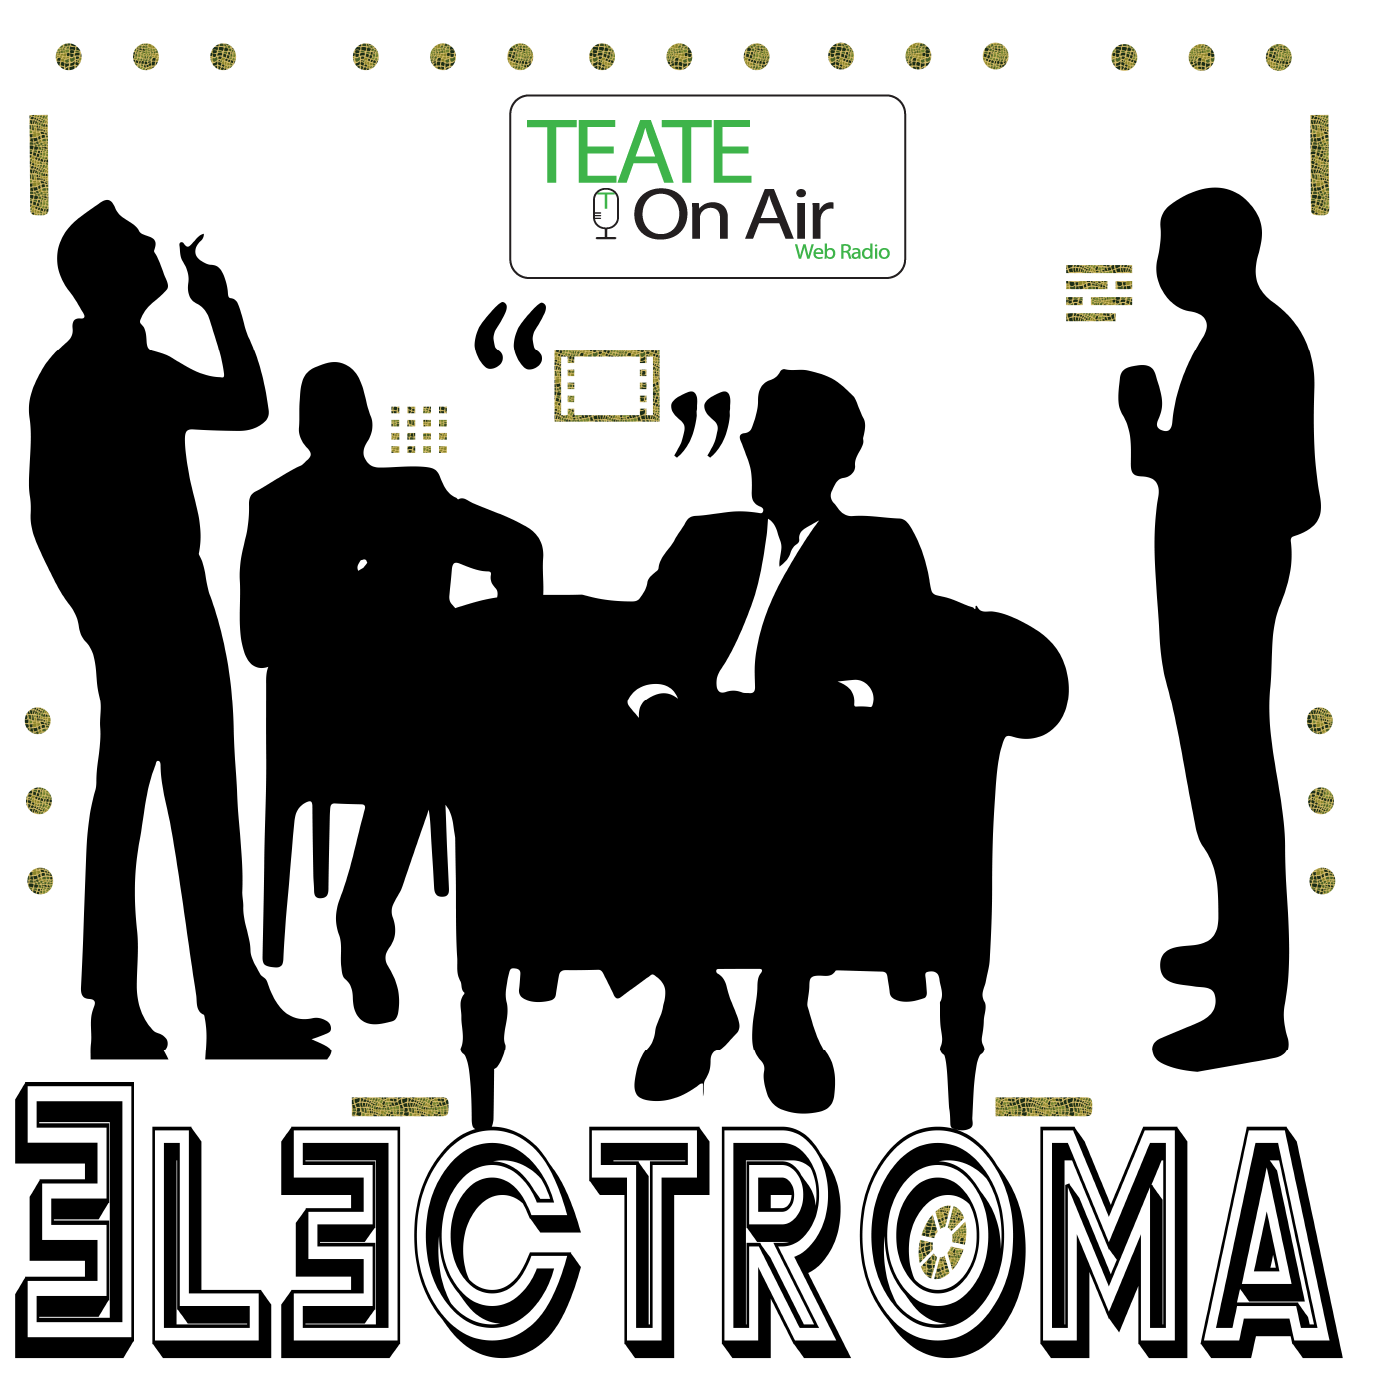 Copertina di "Electroma" + Logo ToA